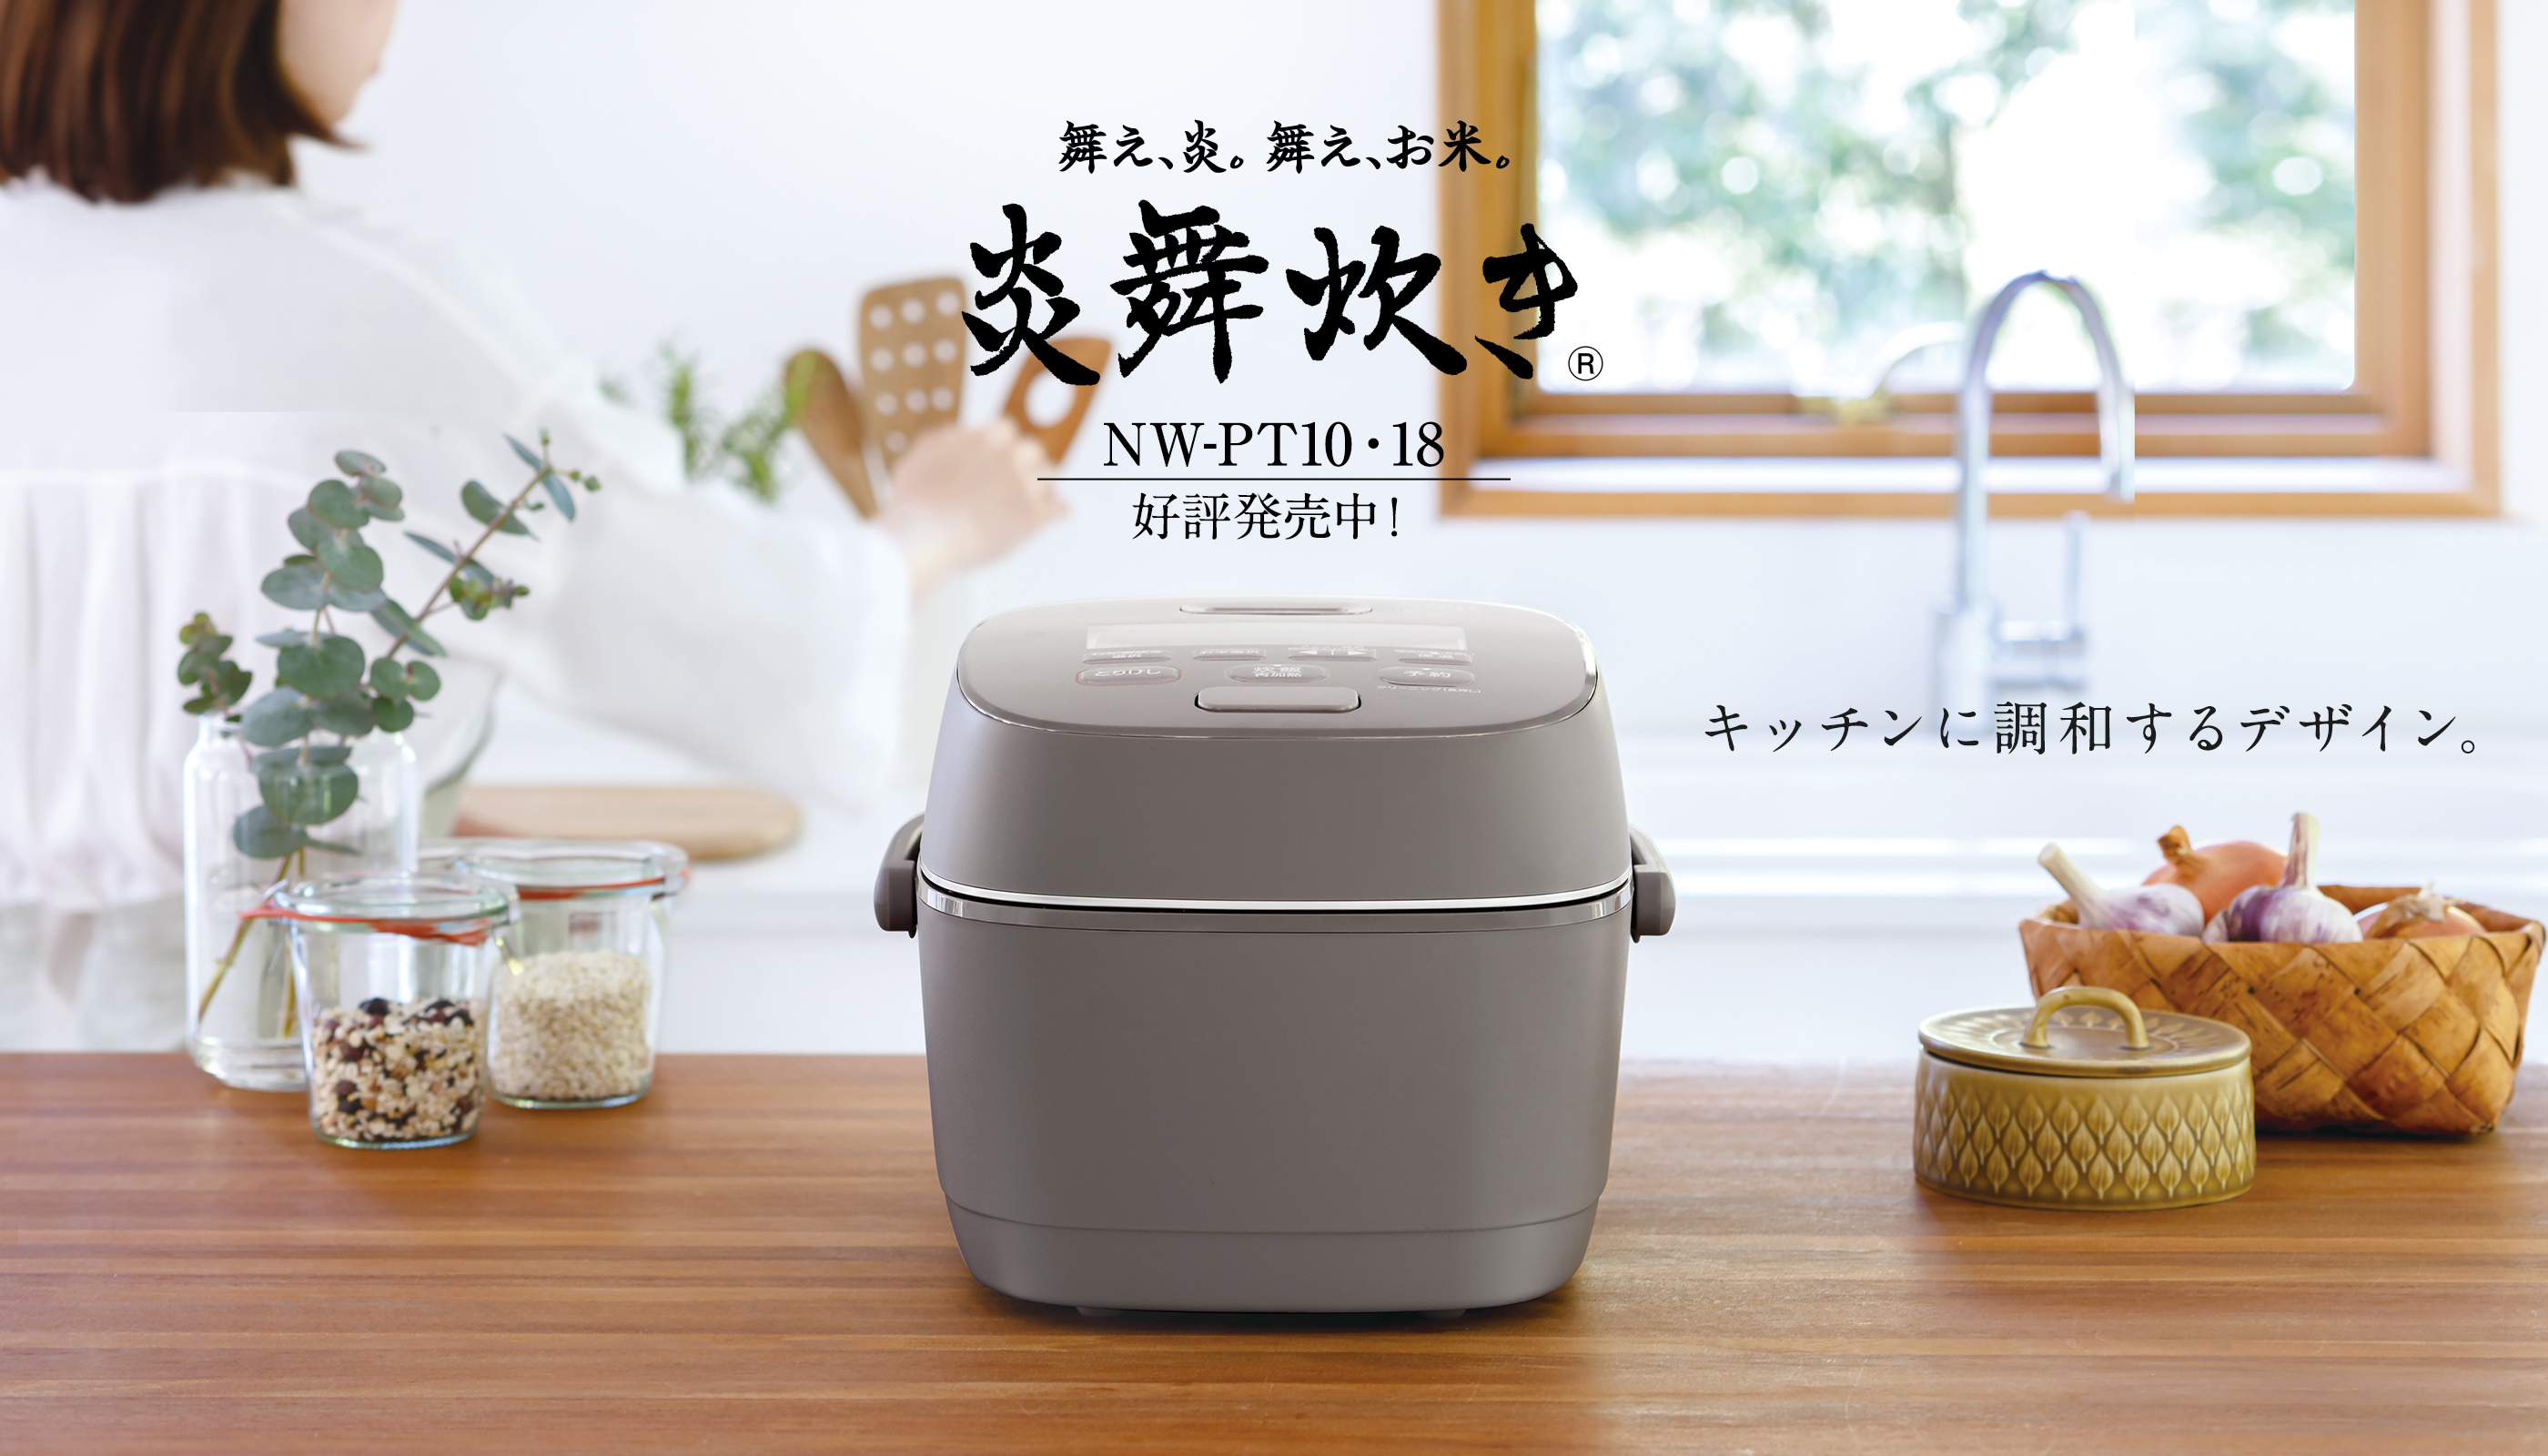 保証書付】 5.5合炊き ZOJIRUSHI 象印 炊飯器 【新品】 NW-PT10-HZ 